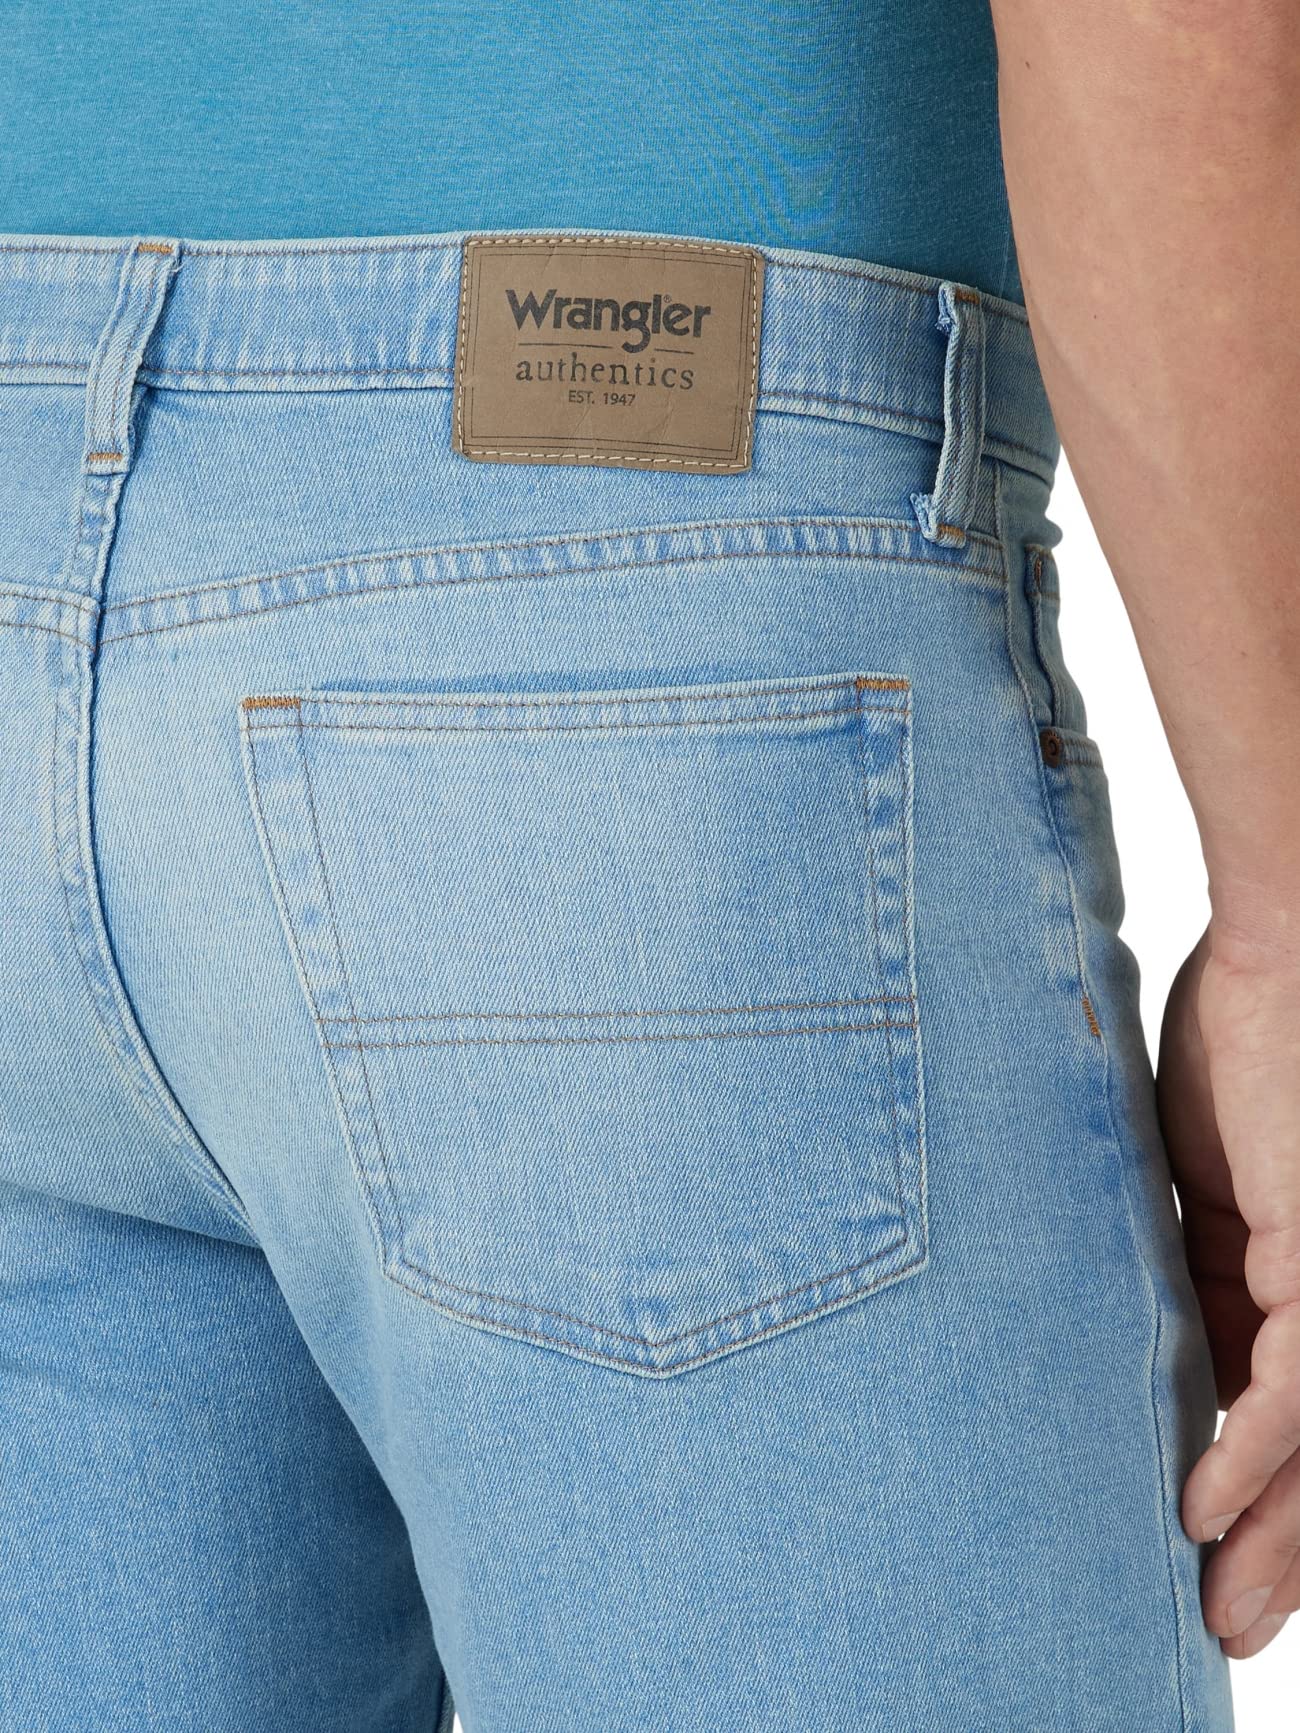 Wrangler Authentics Men's Comfort Flex Waist Relaxed Fit Jean, Aaron, 40W x 30L